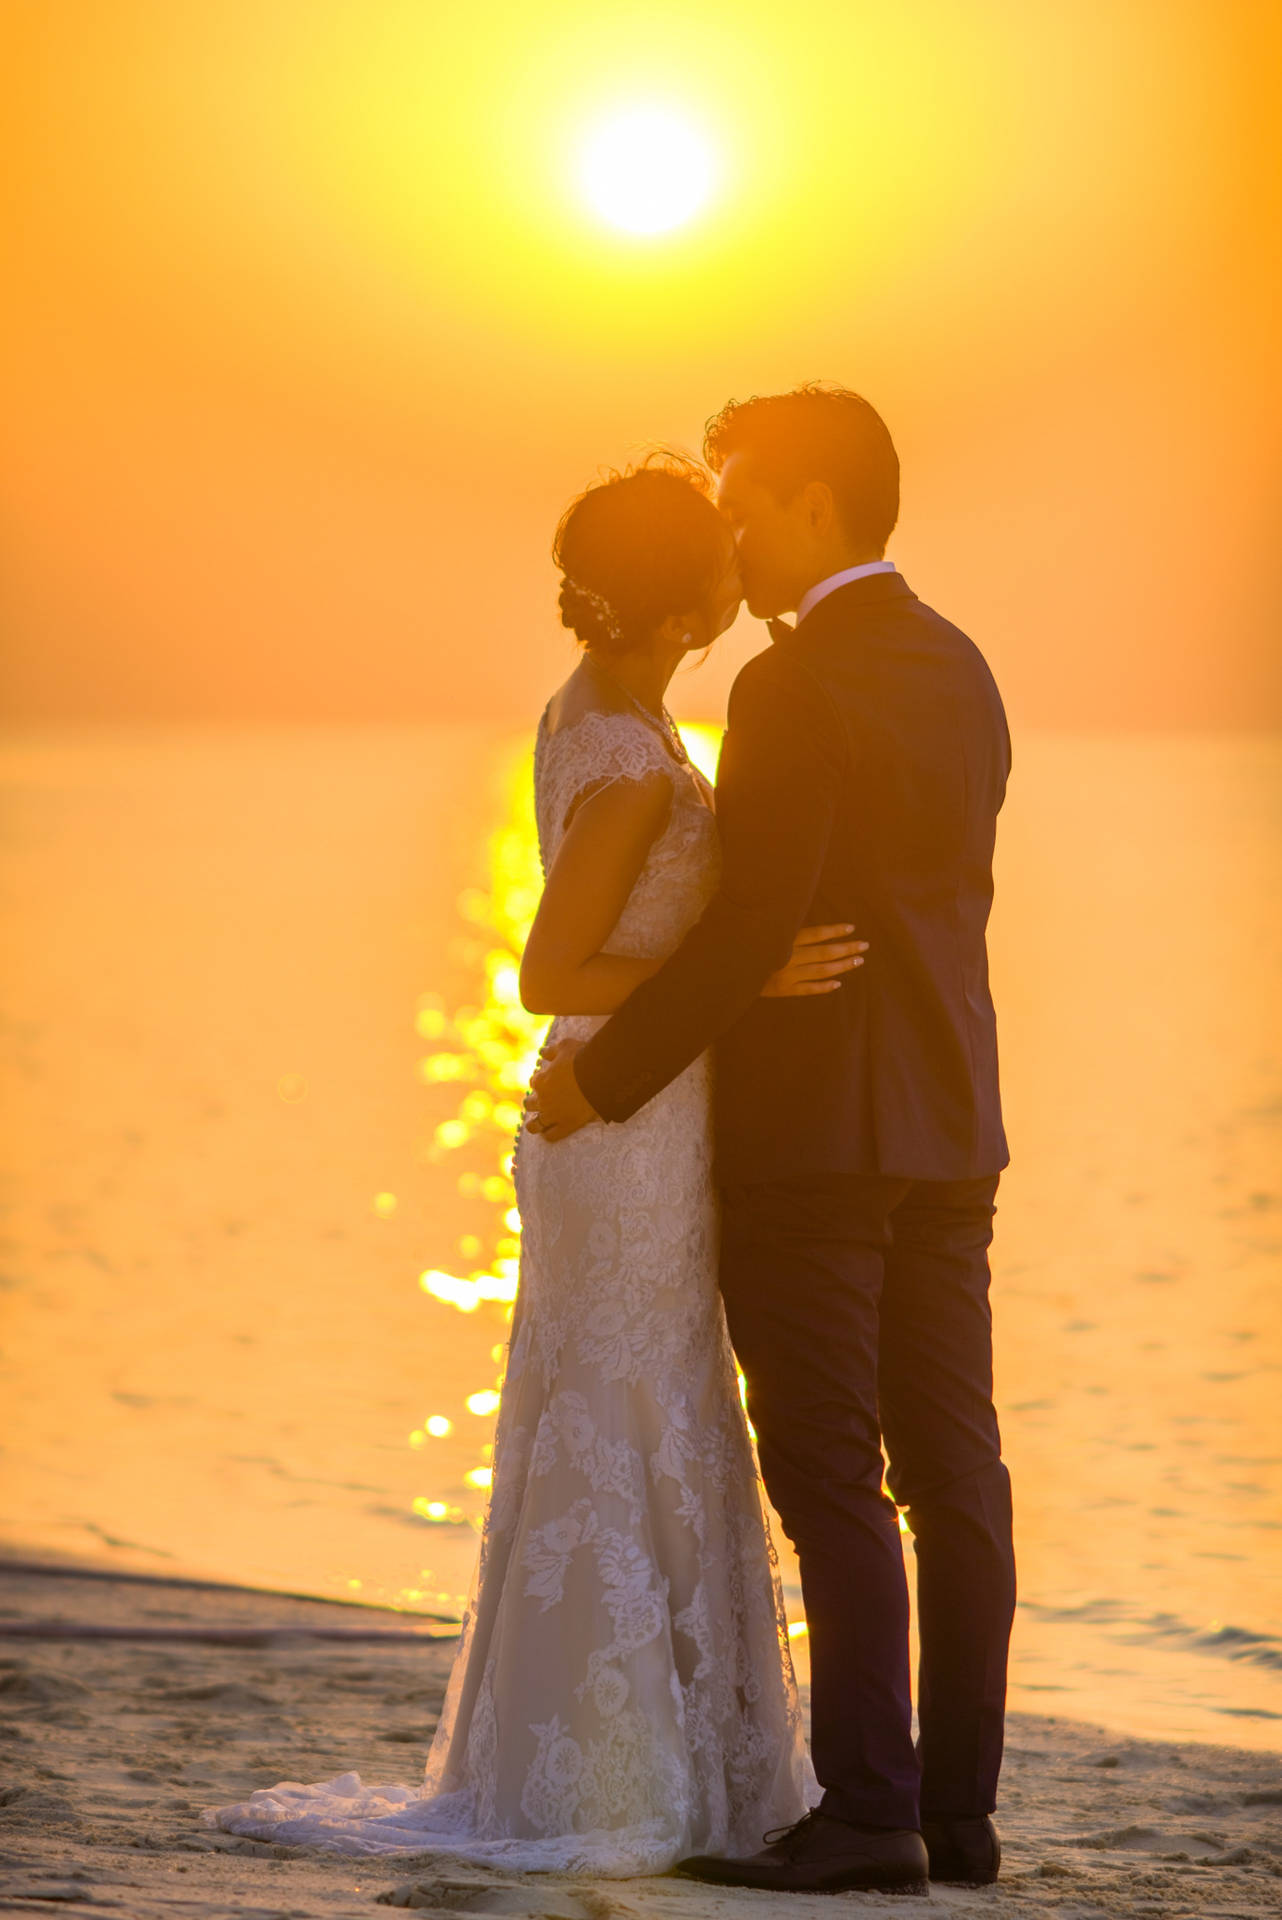 Romantic Couple Sunset Wedding Kiss Background